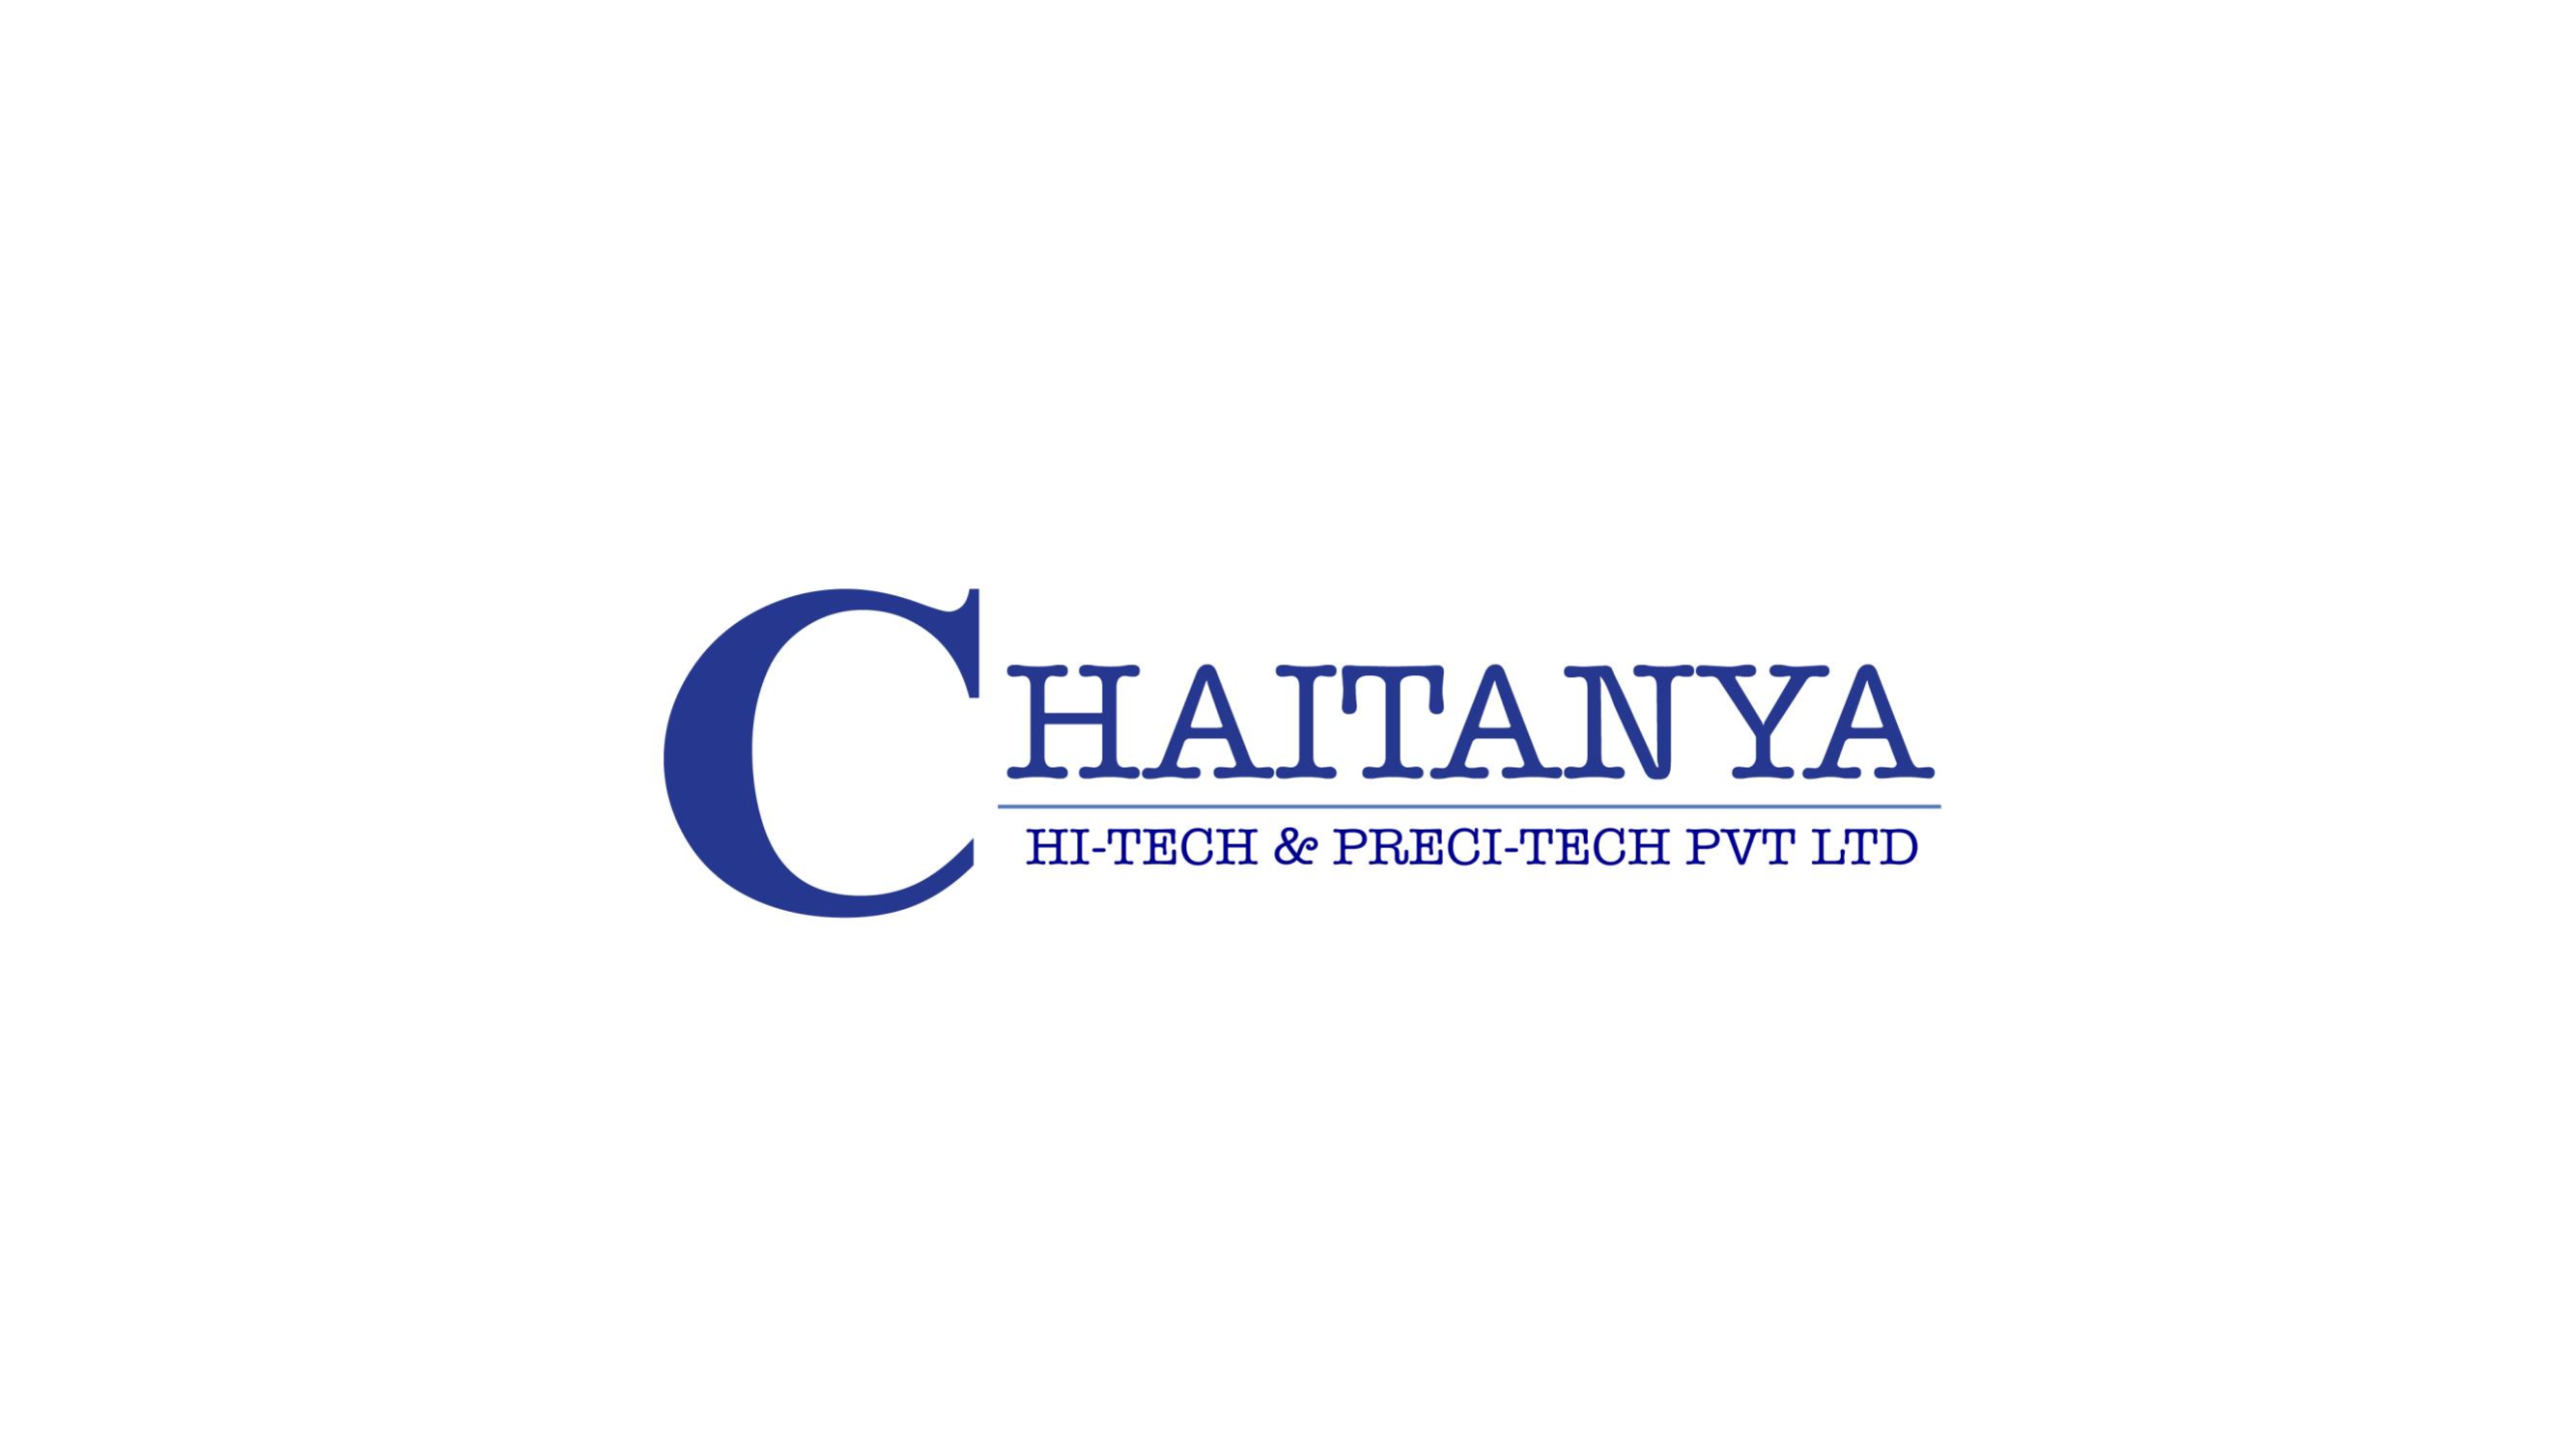 Chaitanya Hi-tech Preci Tech Pvt Ltd